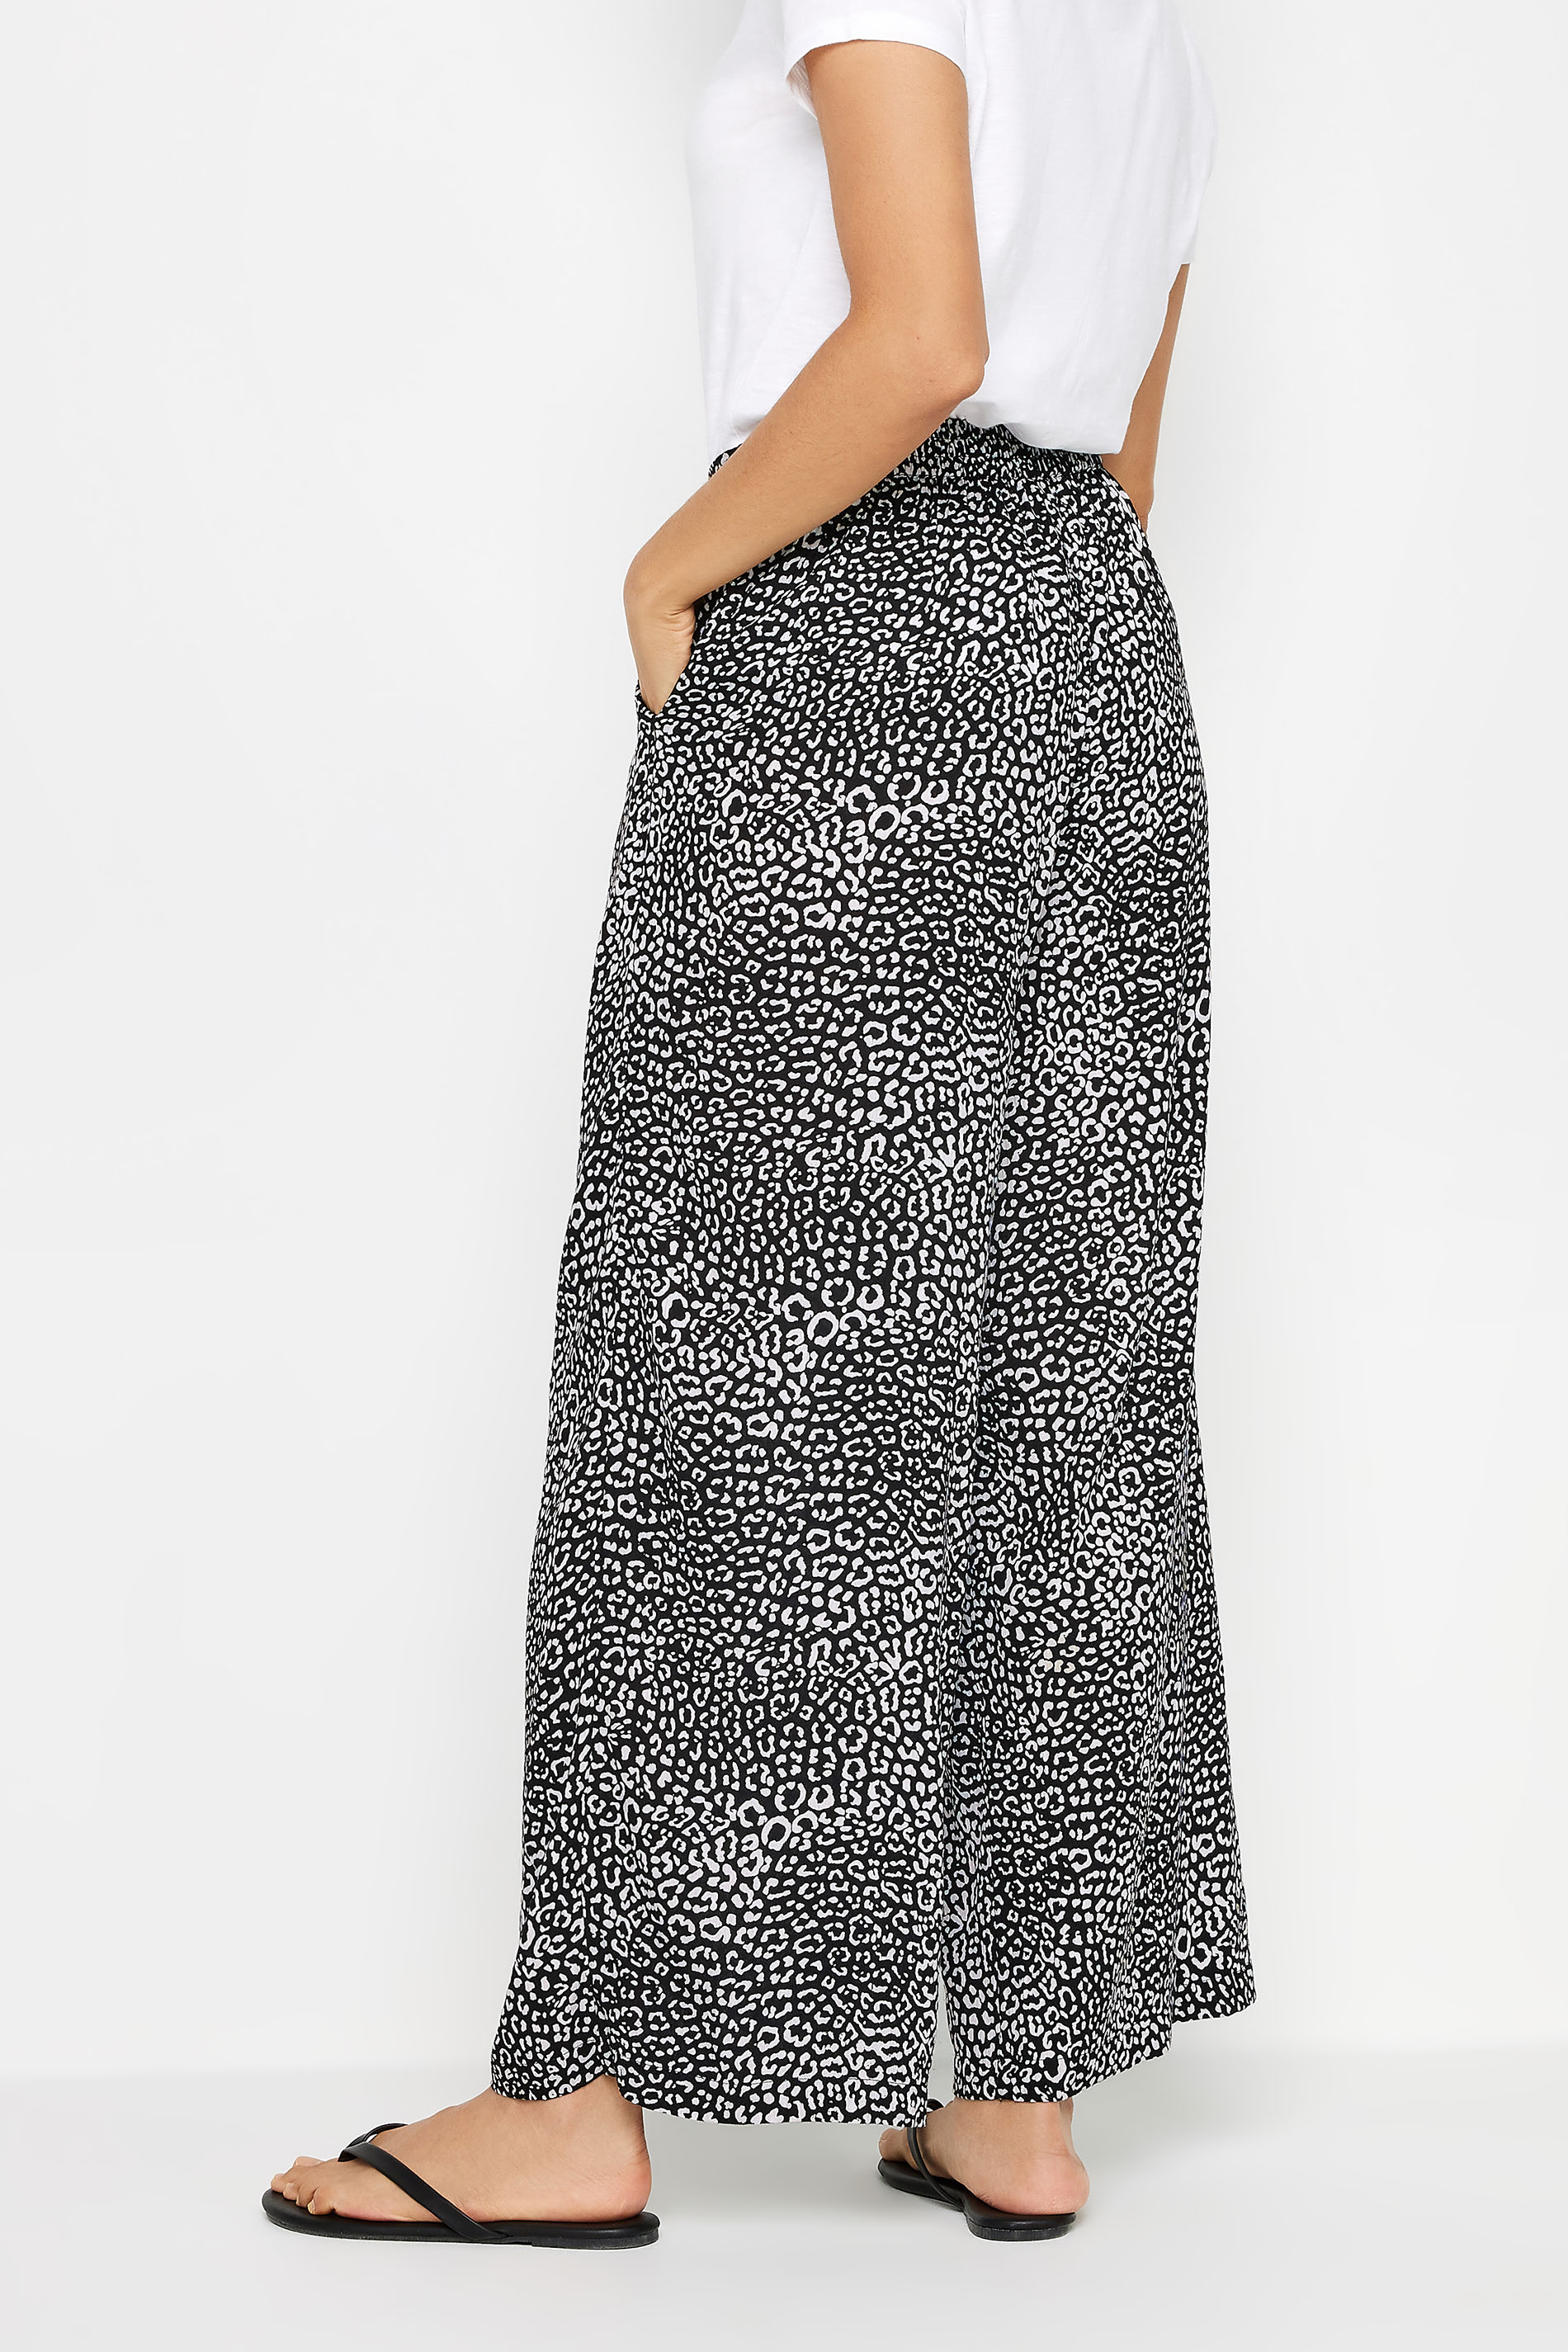 M&Co Black Leopard Animal Print Tassel Detail Wide Leg Trousers | M&Co 3